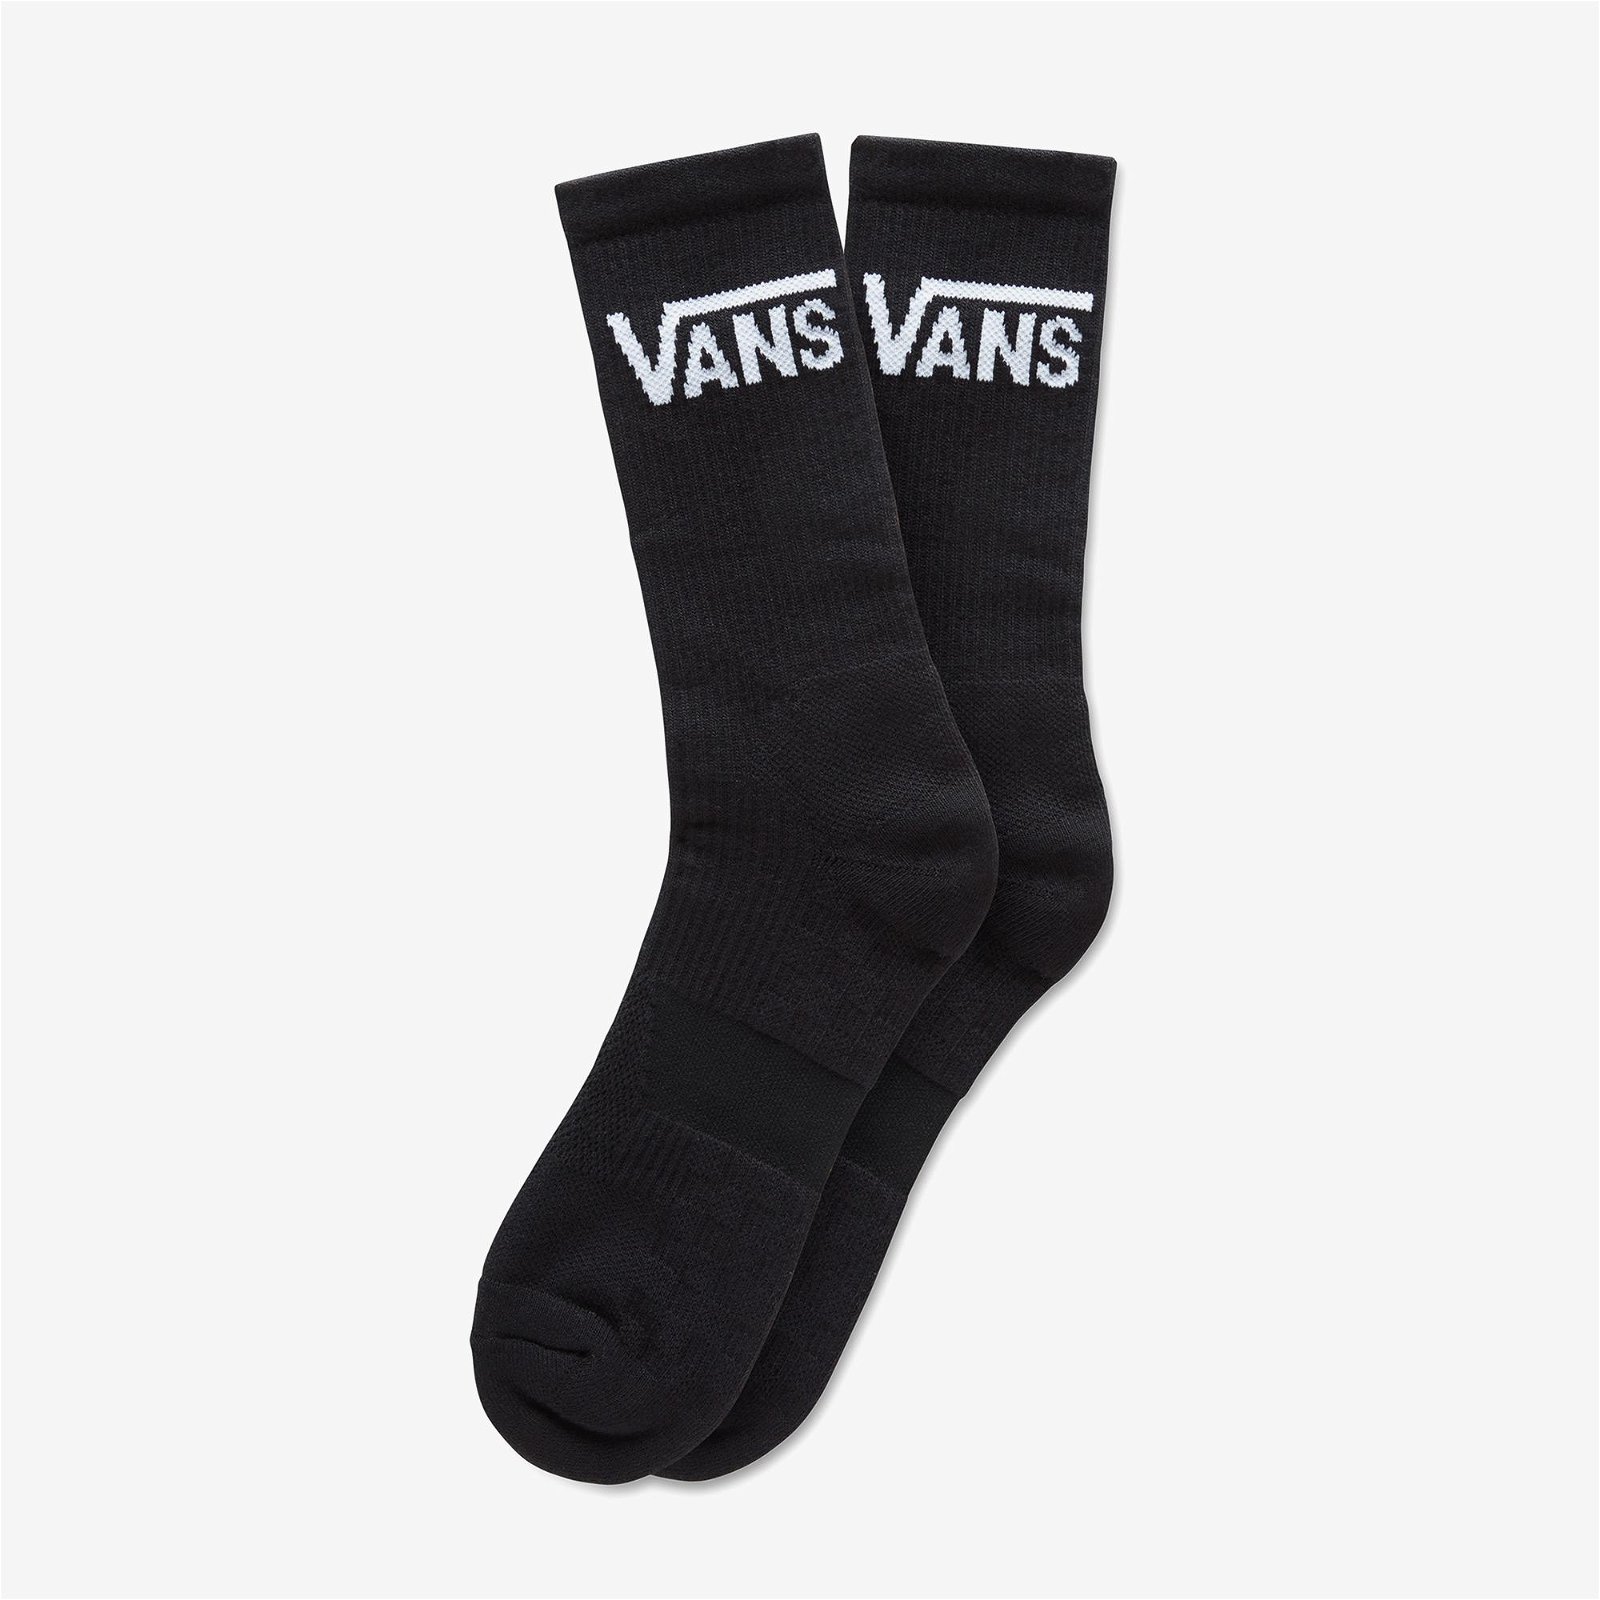 Vans Skate Crew Siyah Çorap